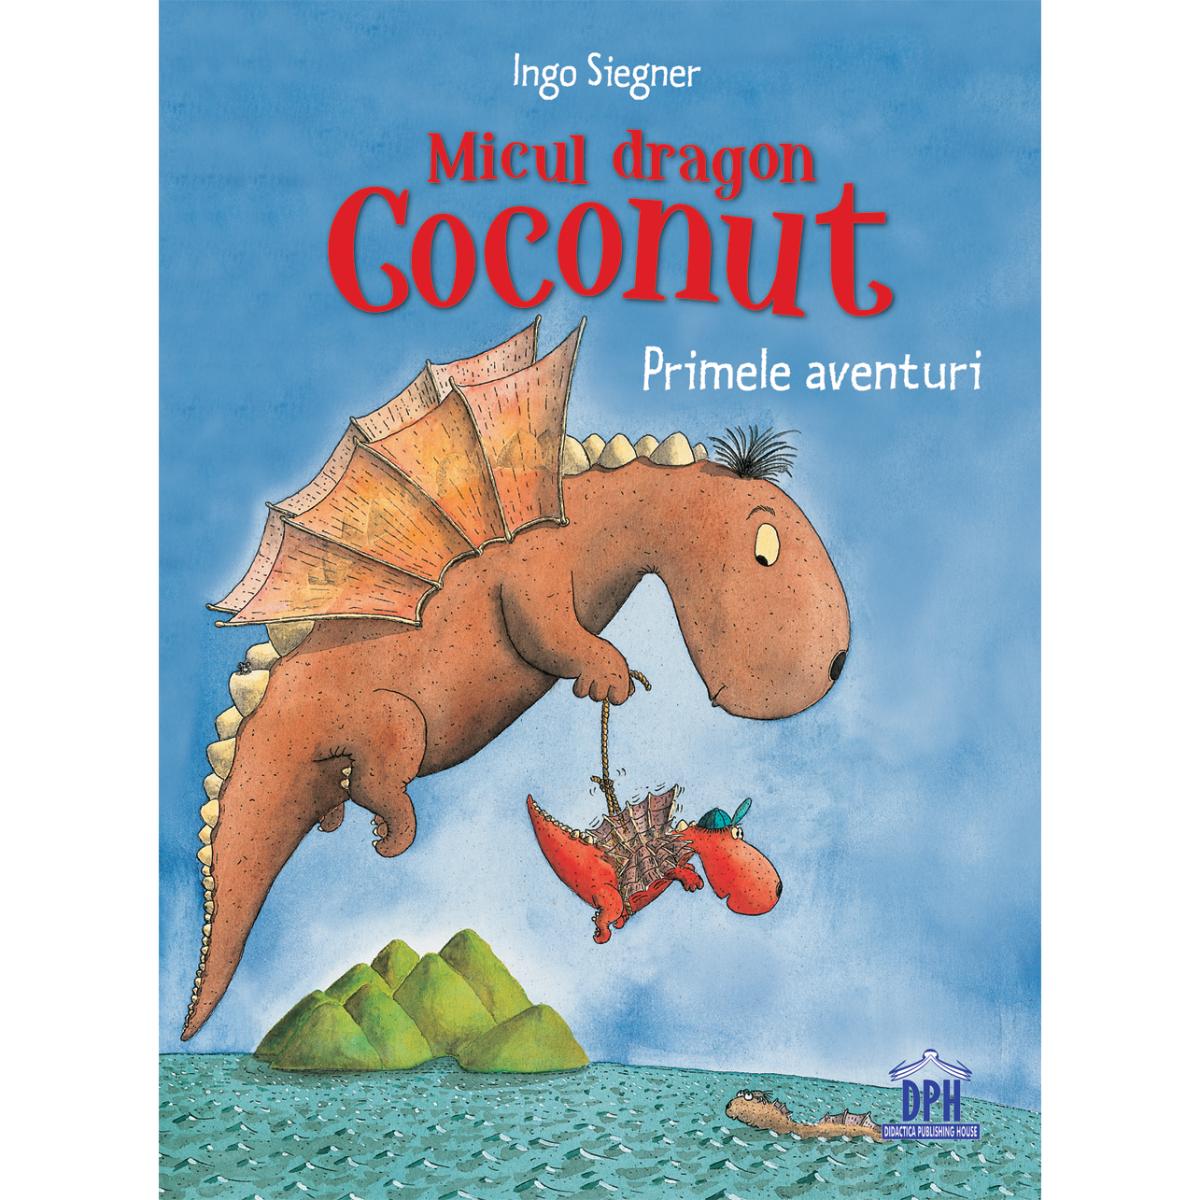 Micul dragon Coconut, Primele aventuri, Ingo Siegner